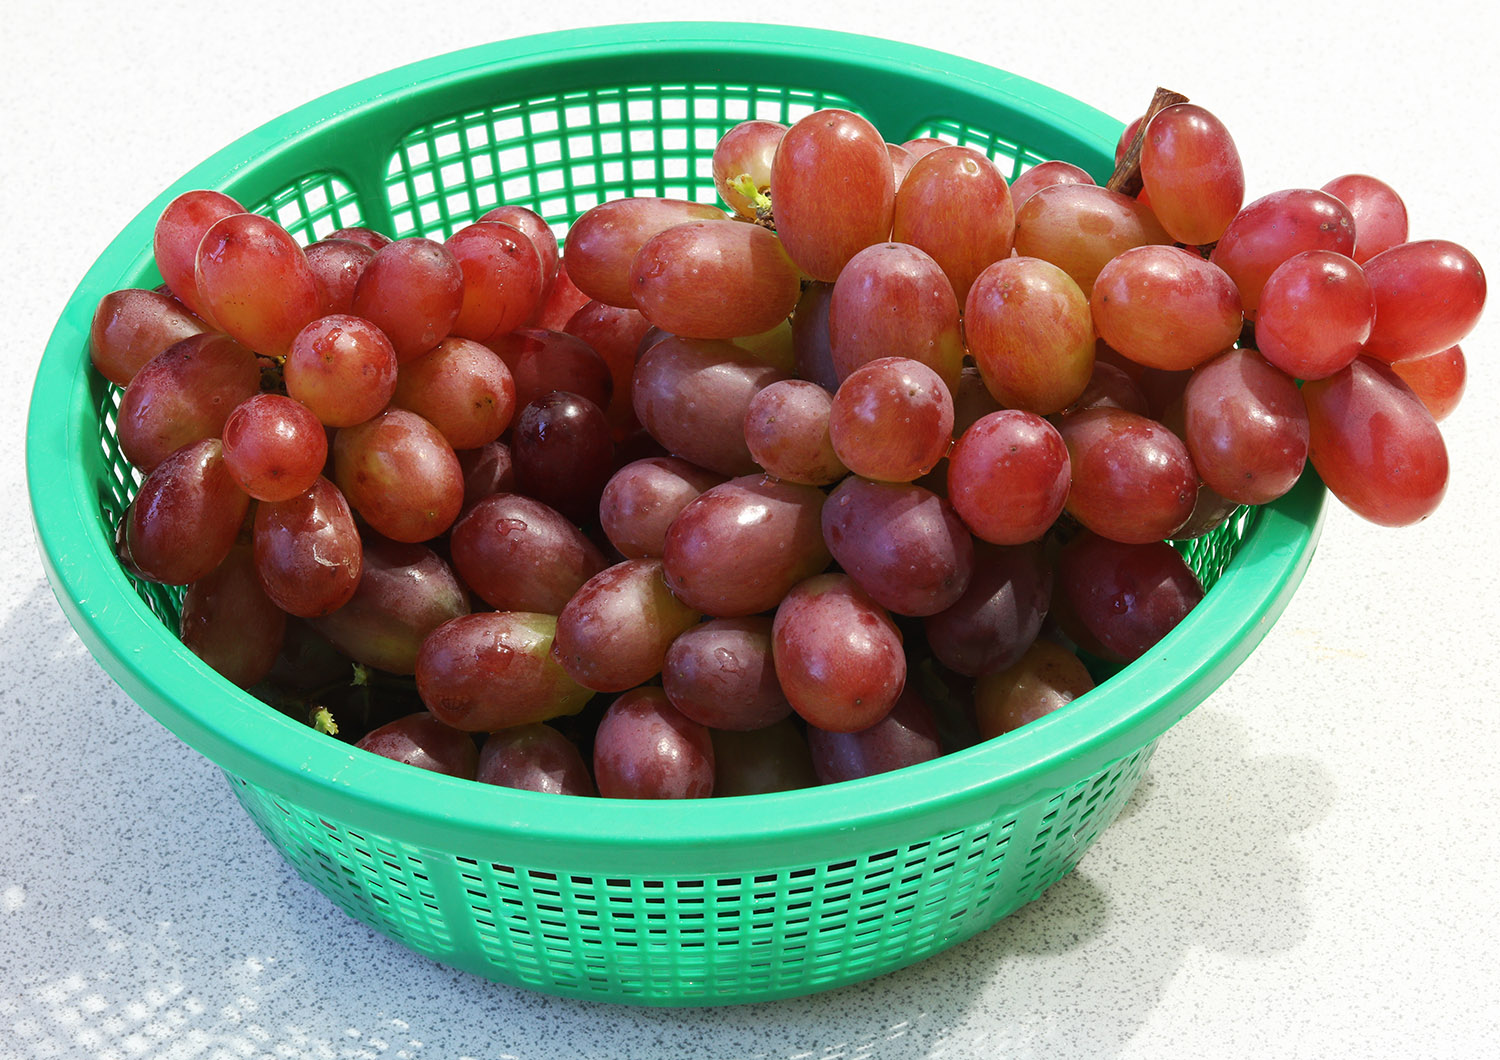 Seedless grapes s.jpg